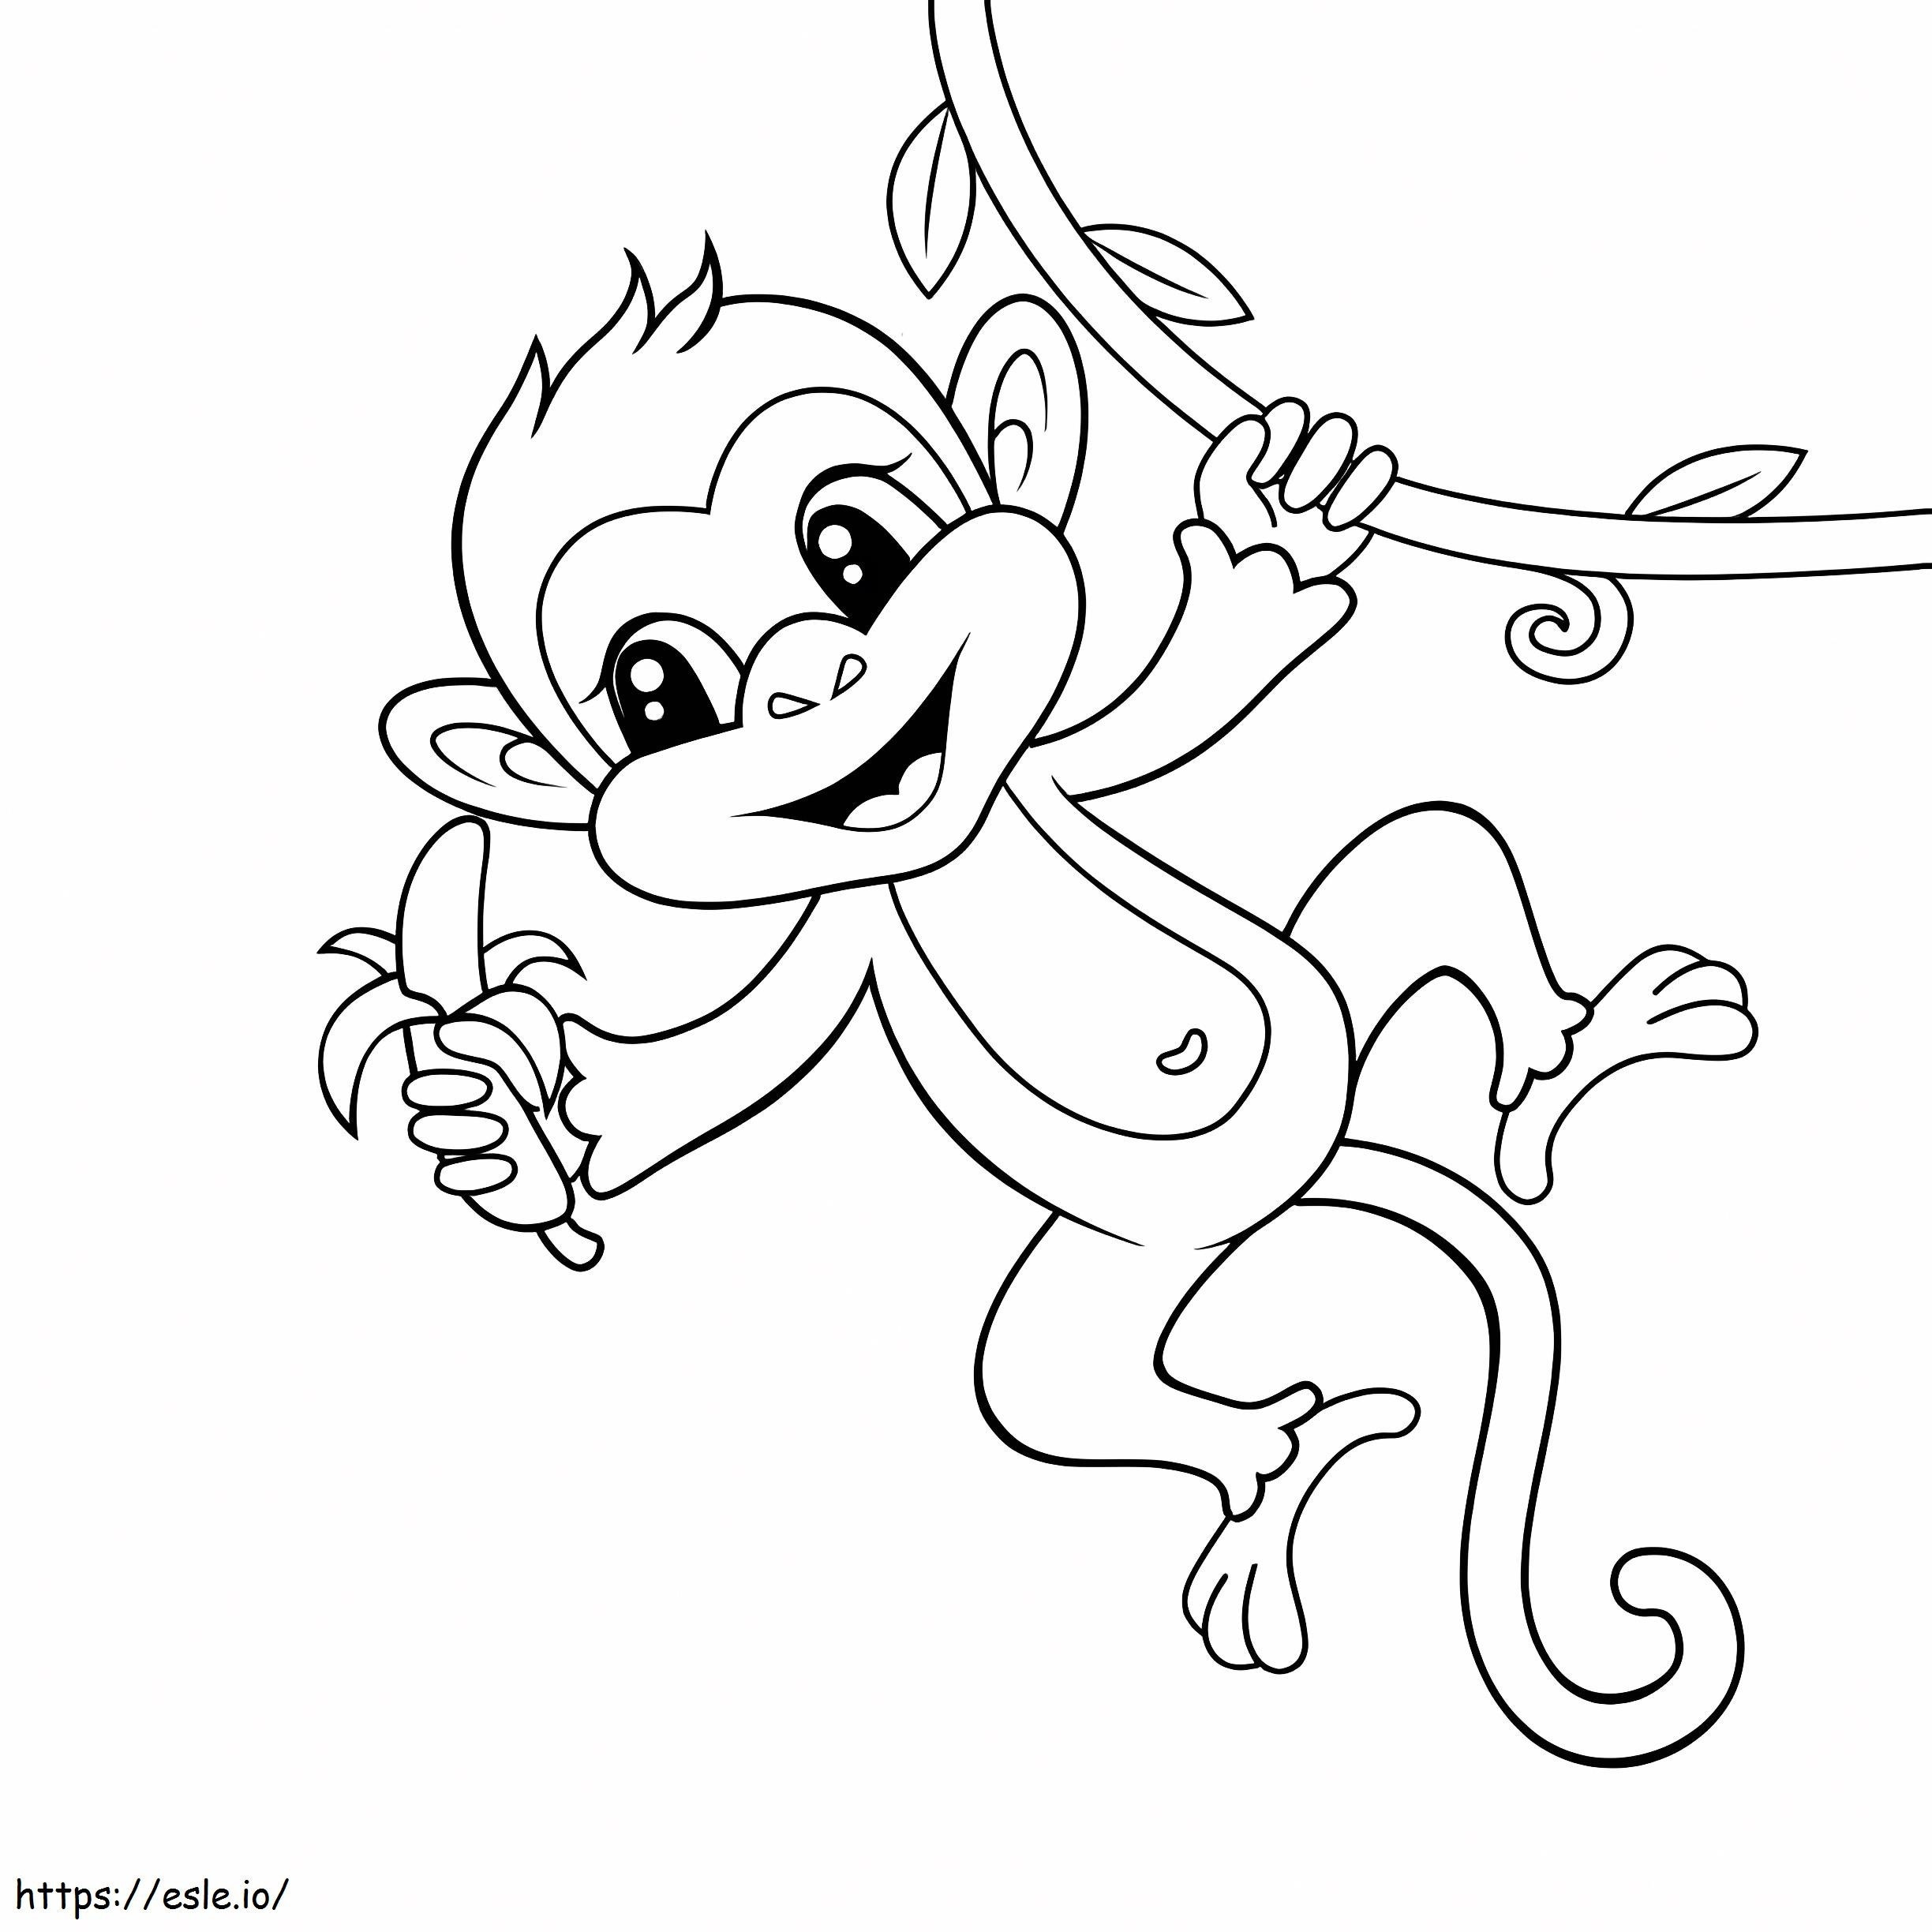 Monkey Holding Banana And Climbing coloring page